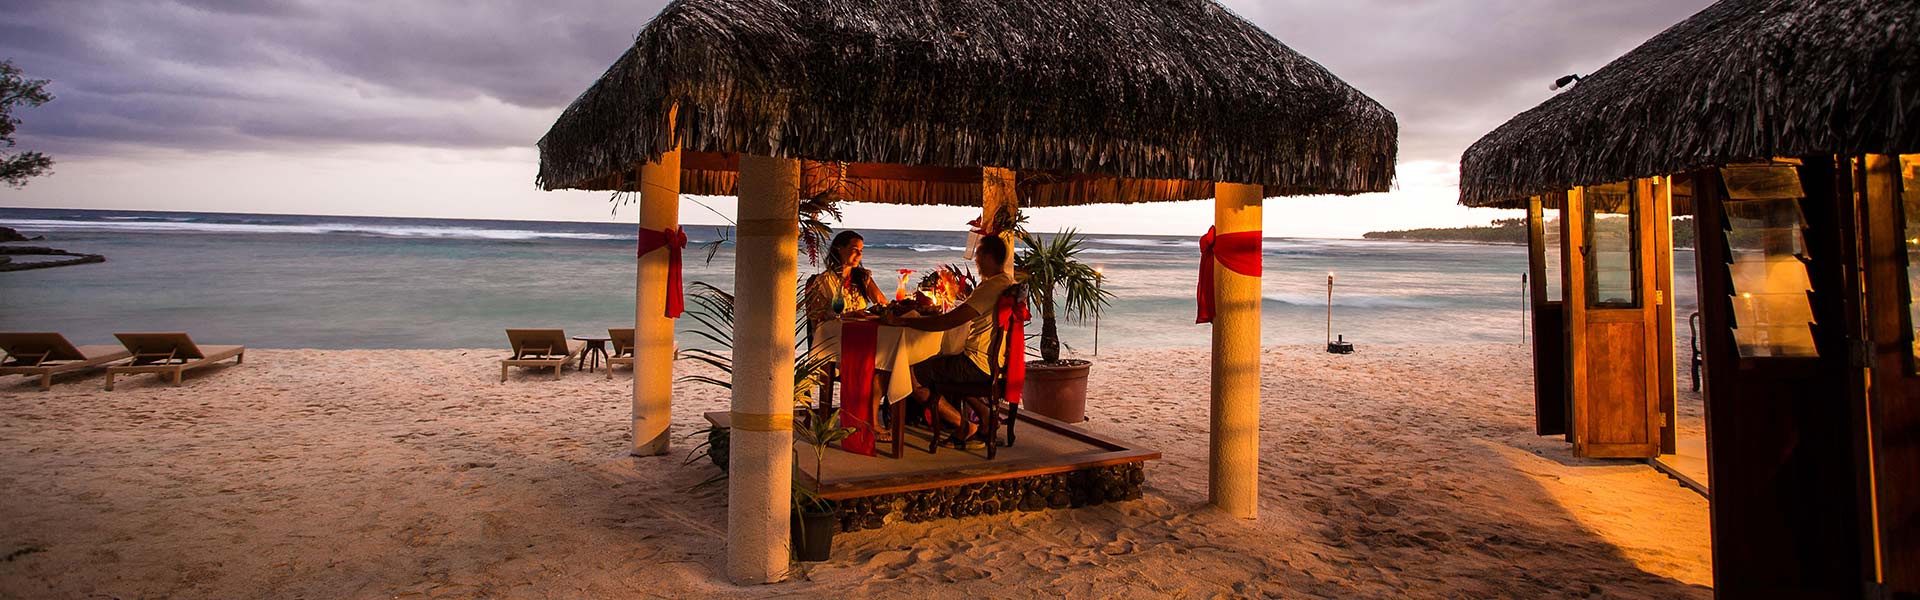 Frangipani Dreams Come True: Say ‘I Do’ in Vanuatu!